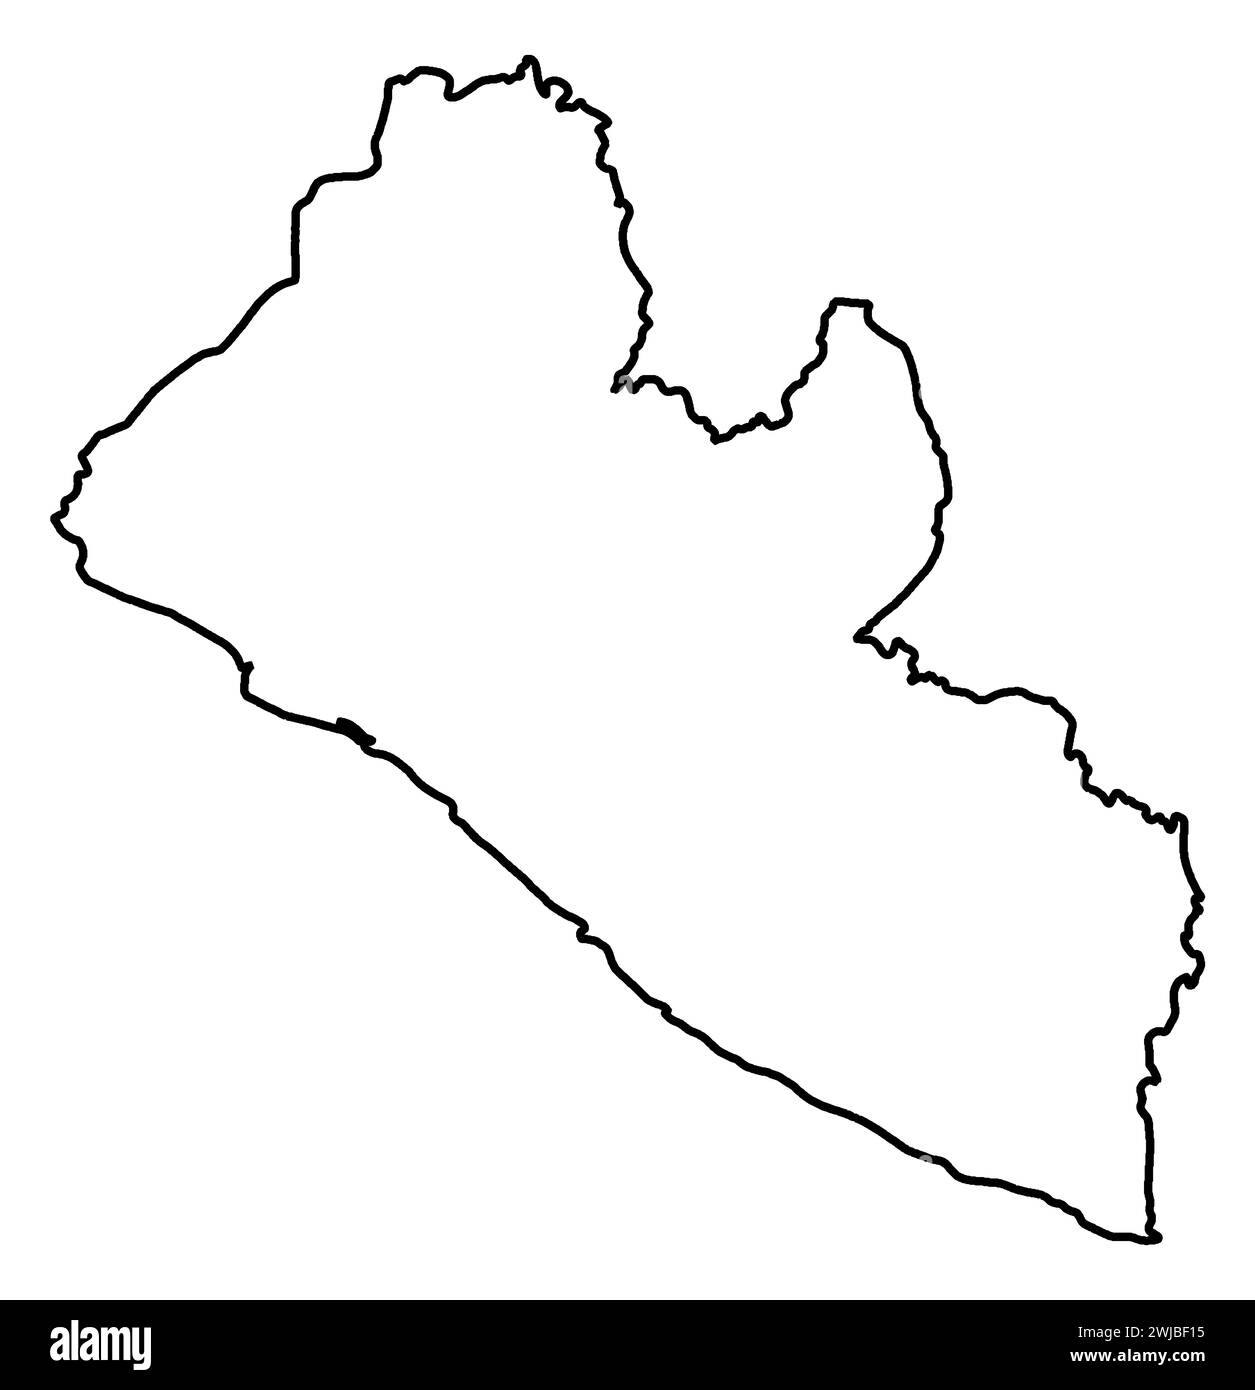 Liberia blackline outline silhouette map over a white background Stock Photo